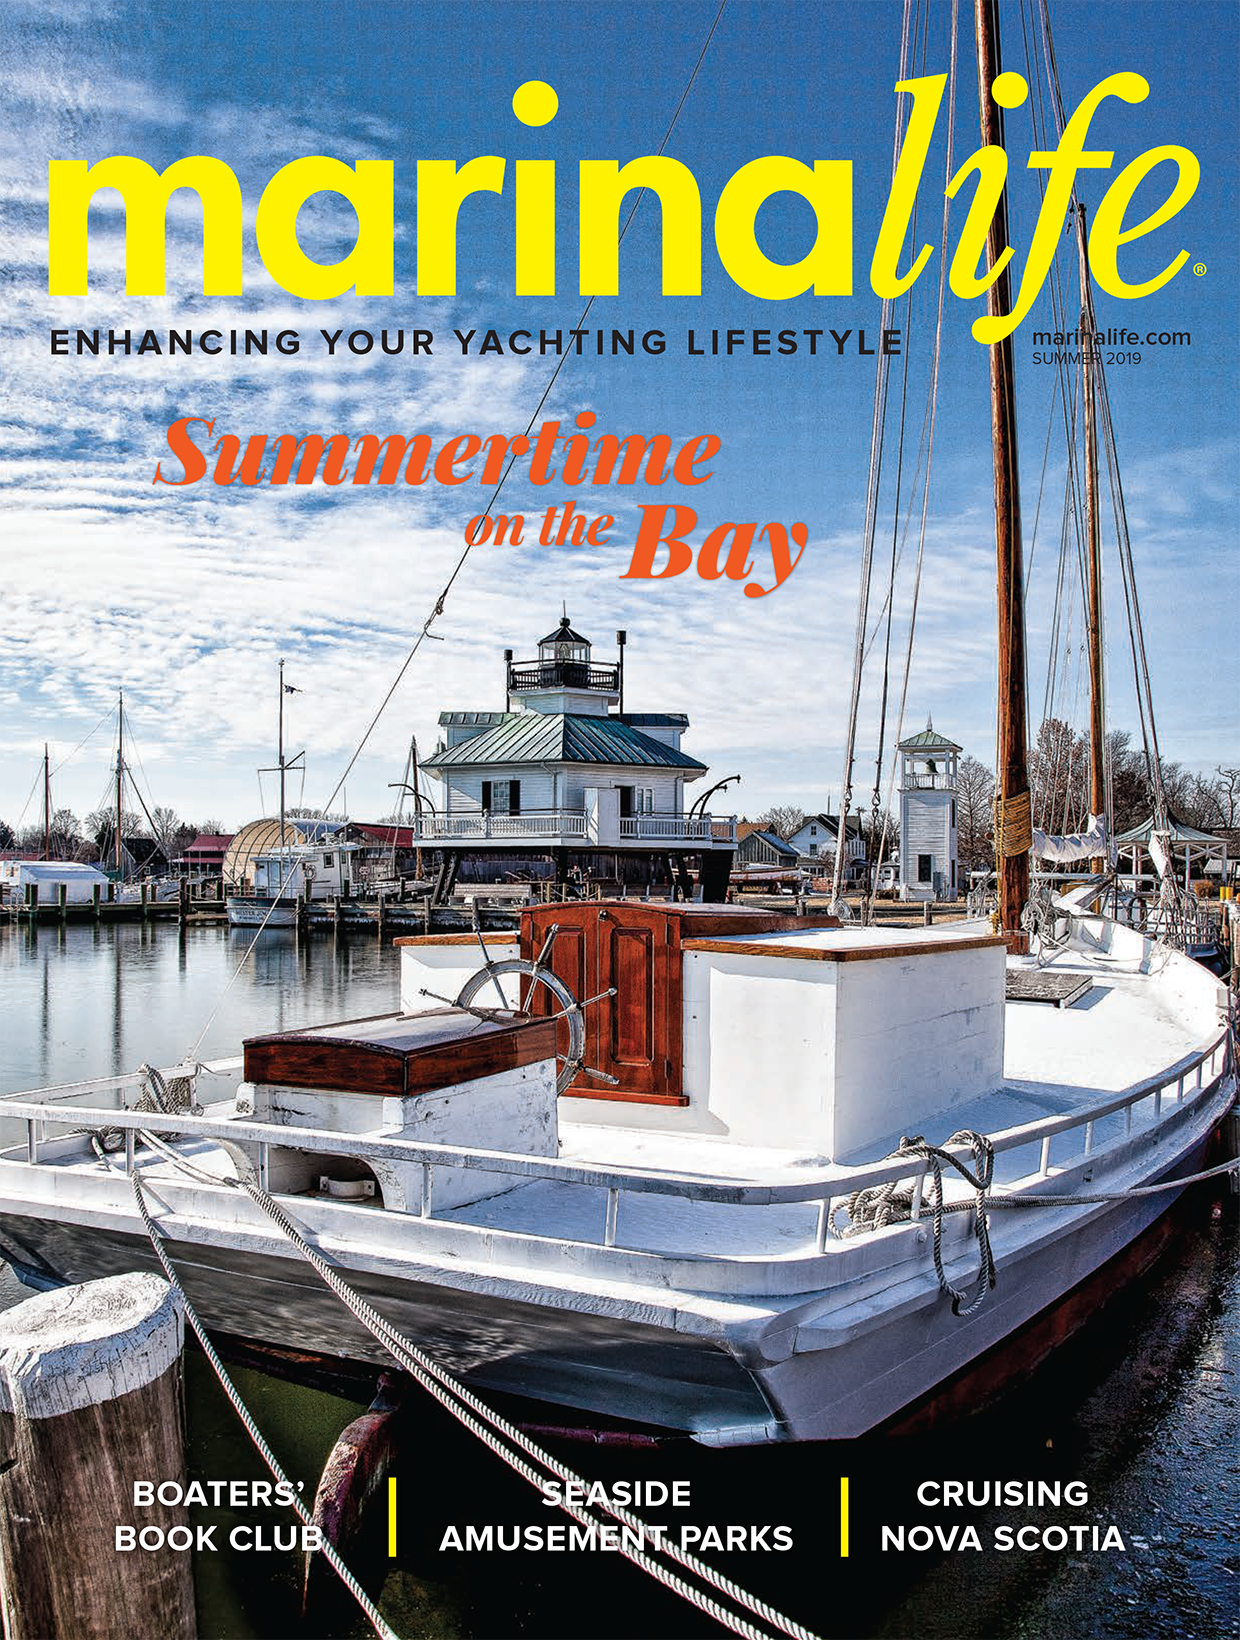 Summer 2019 Magazine - Summertime on the Bay - Marinalife